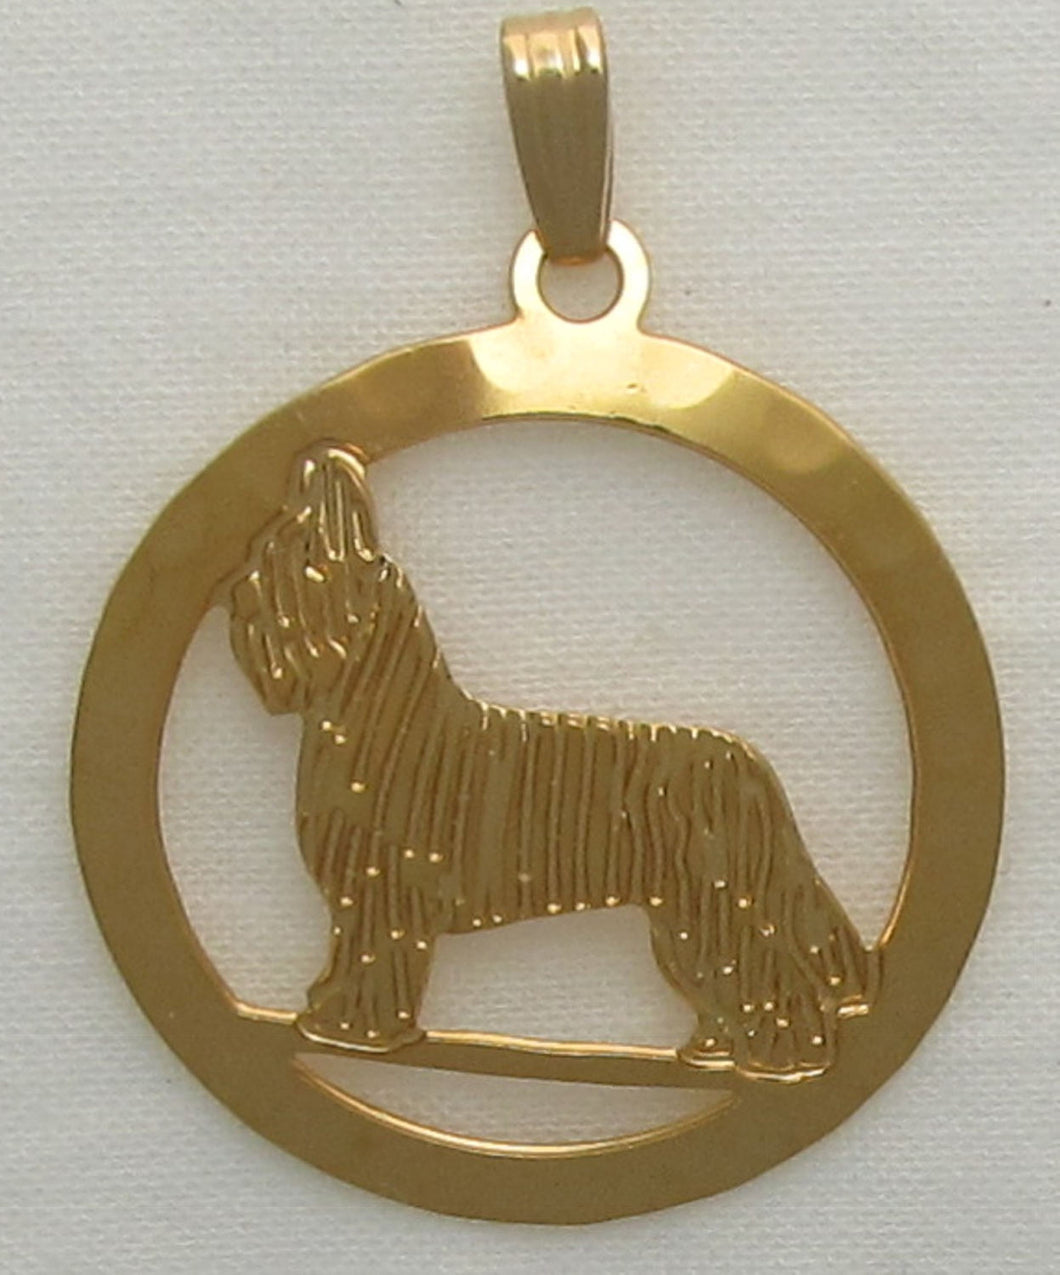 Briard Pendant by Touchstone Dog Designs // Briard Jewelry  //  Dog Breed Jewelry  // AKC Breed Jewelry